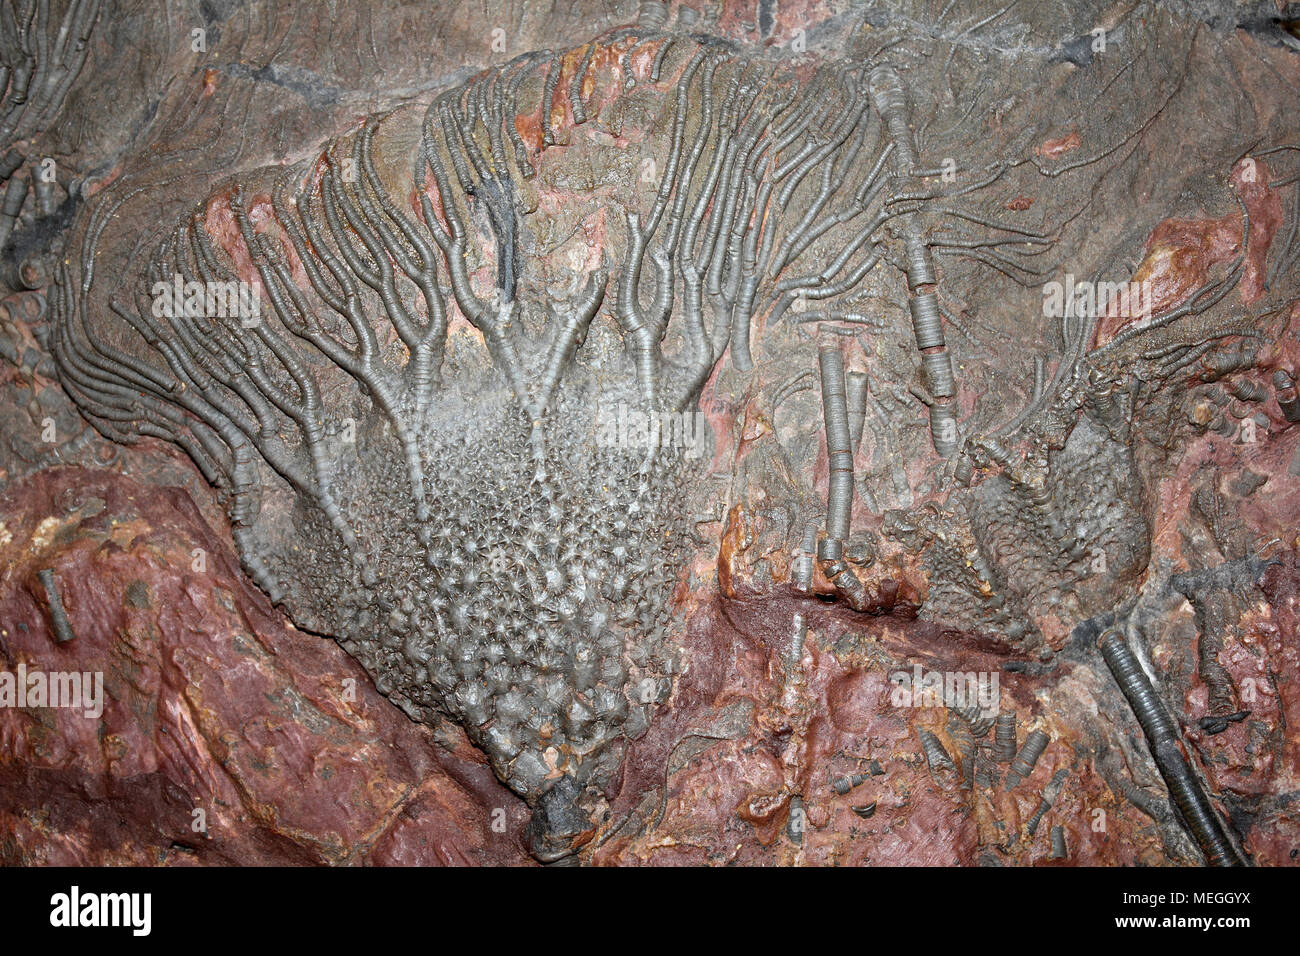 Fossil Crinoids Scyphocrinites elegans, Silurian Morocco Stock Photo